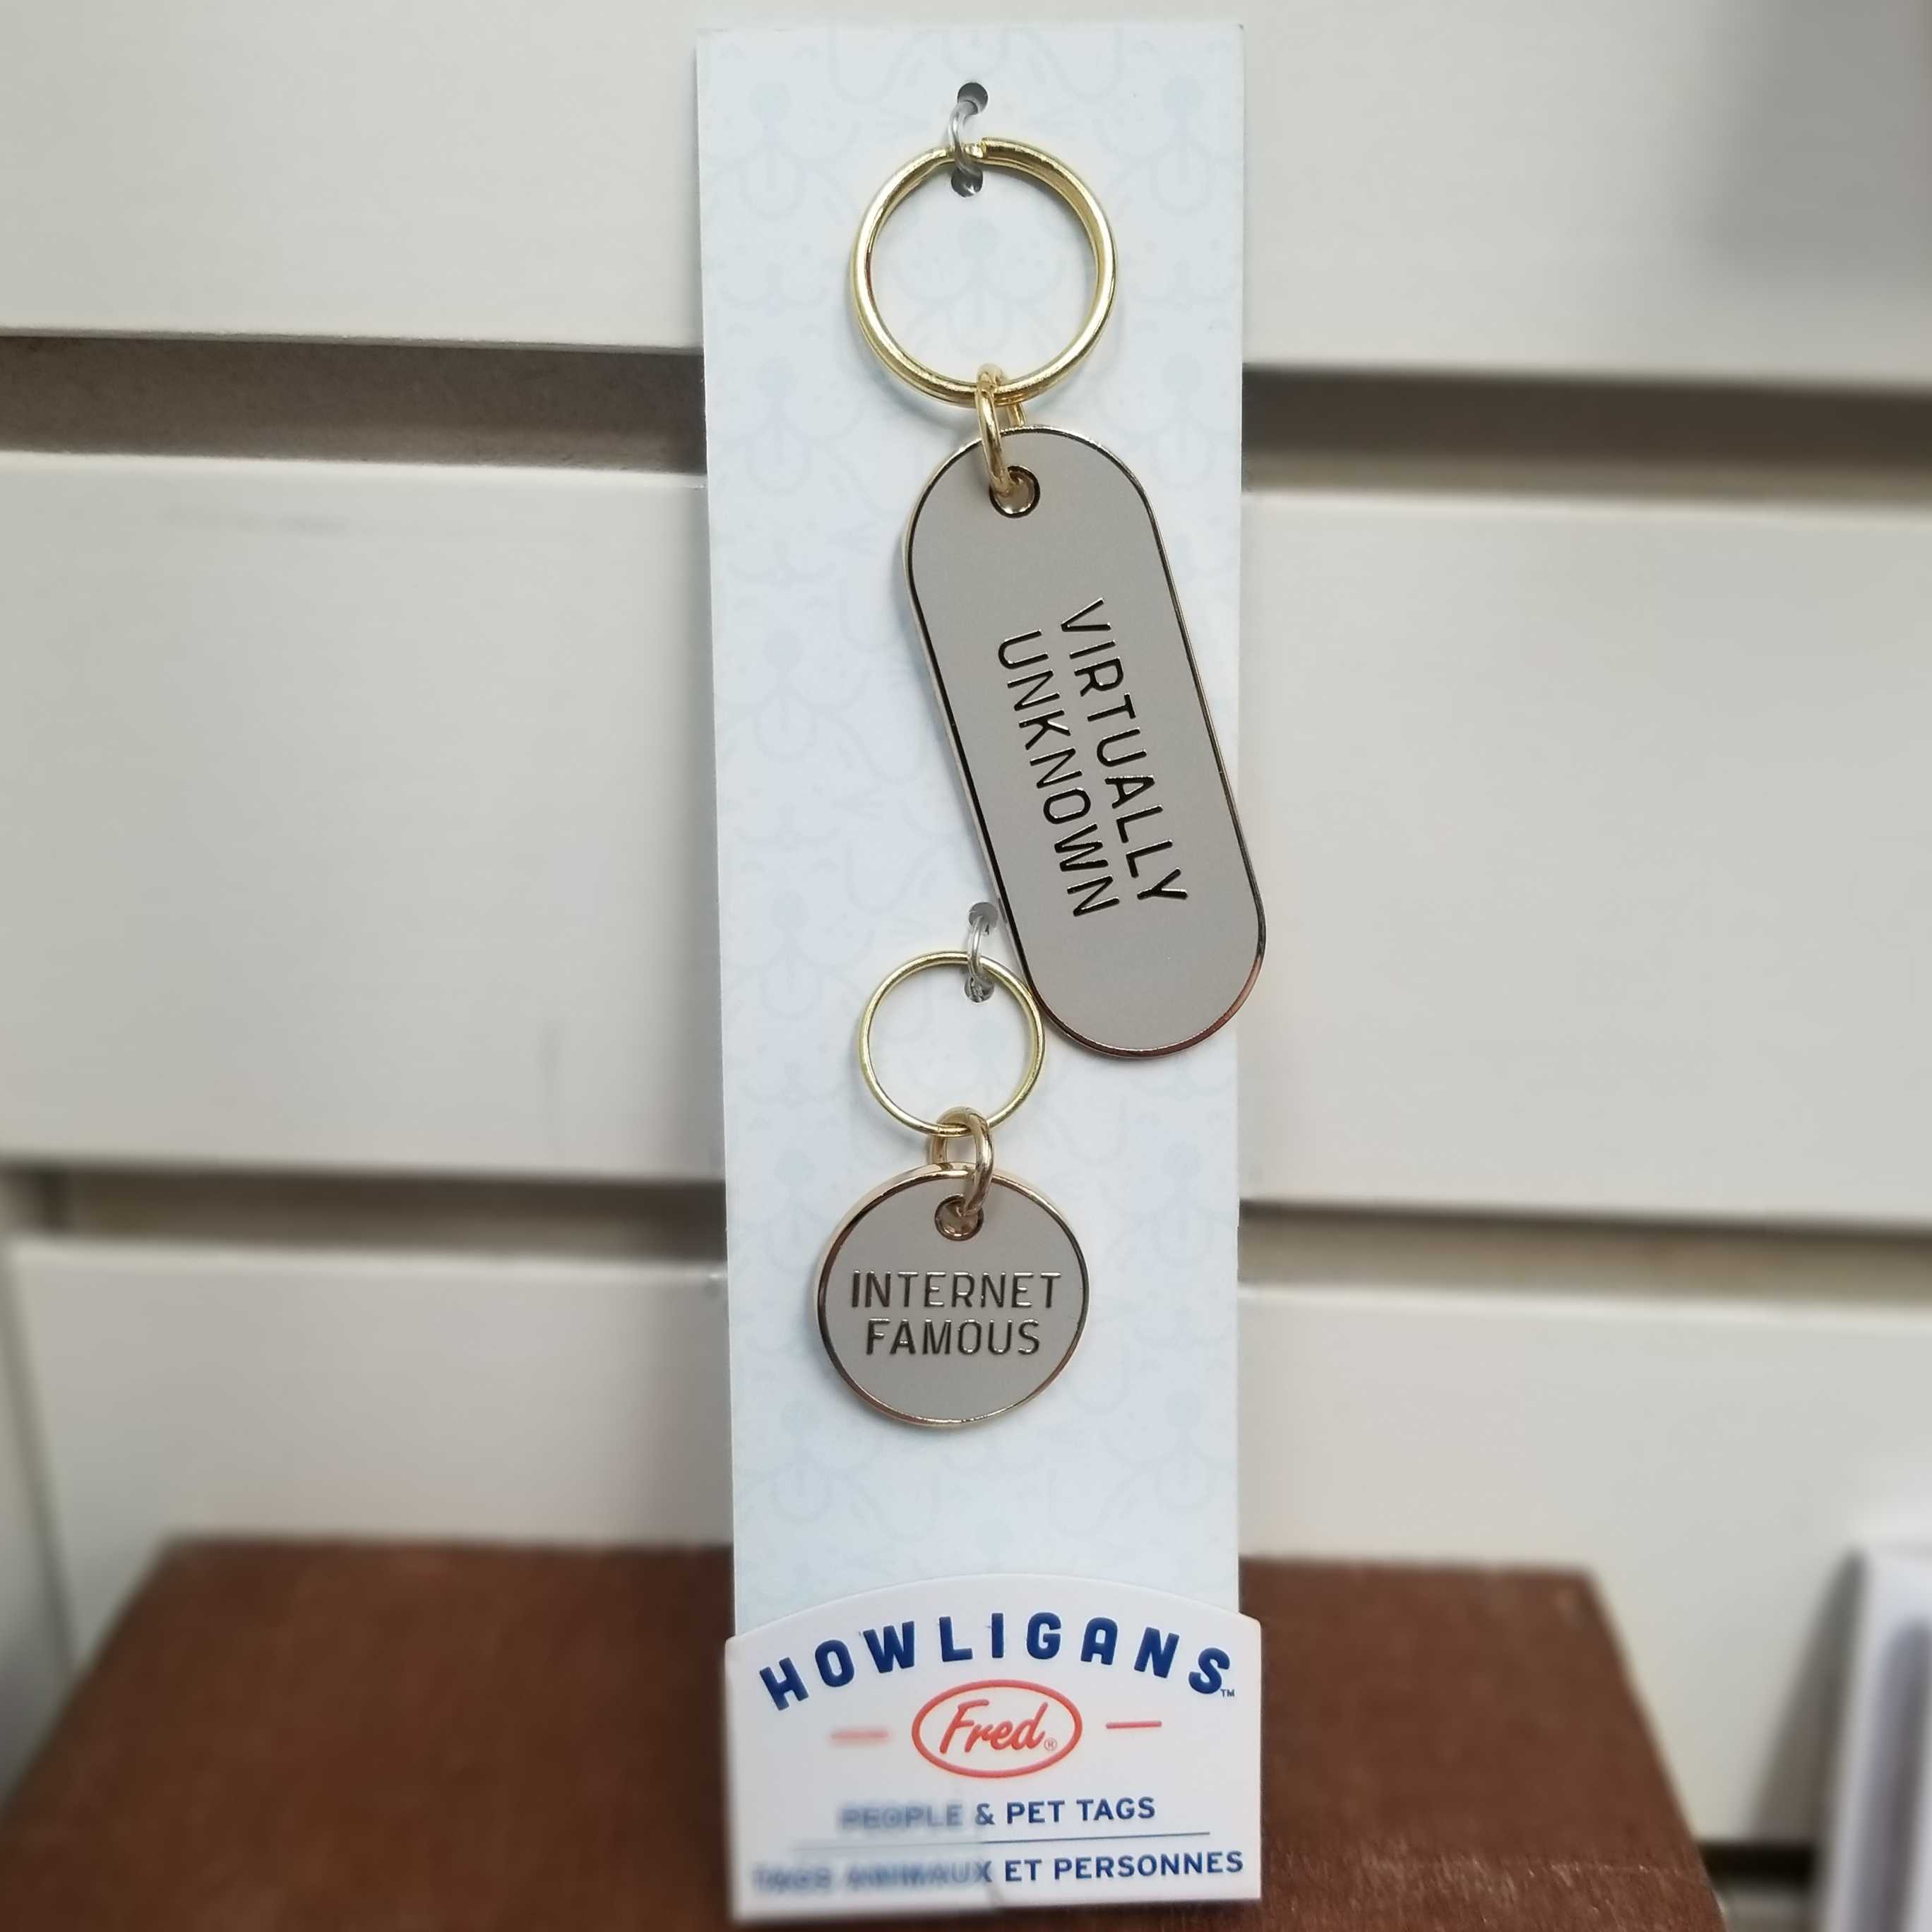 Howligans "Internet Famous" Keychain Set